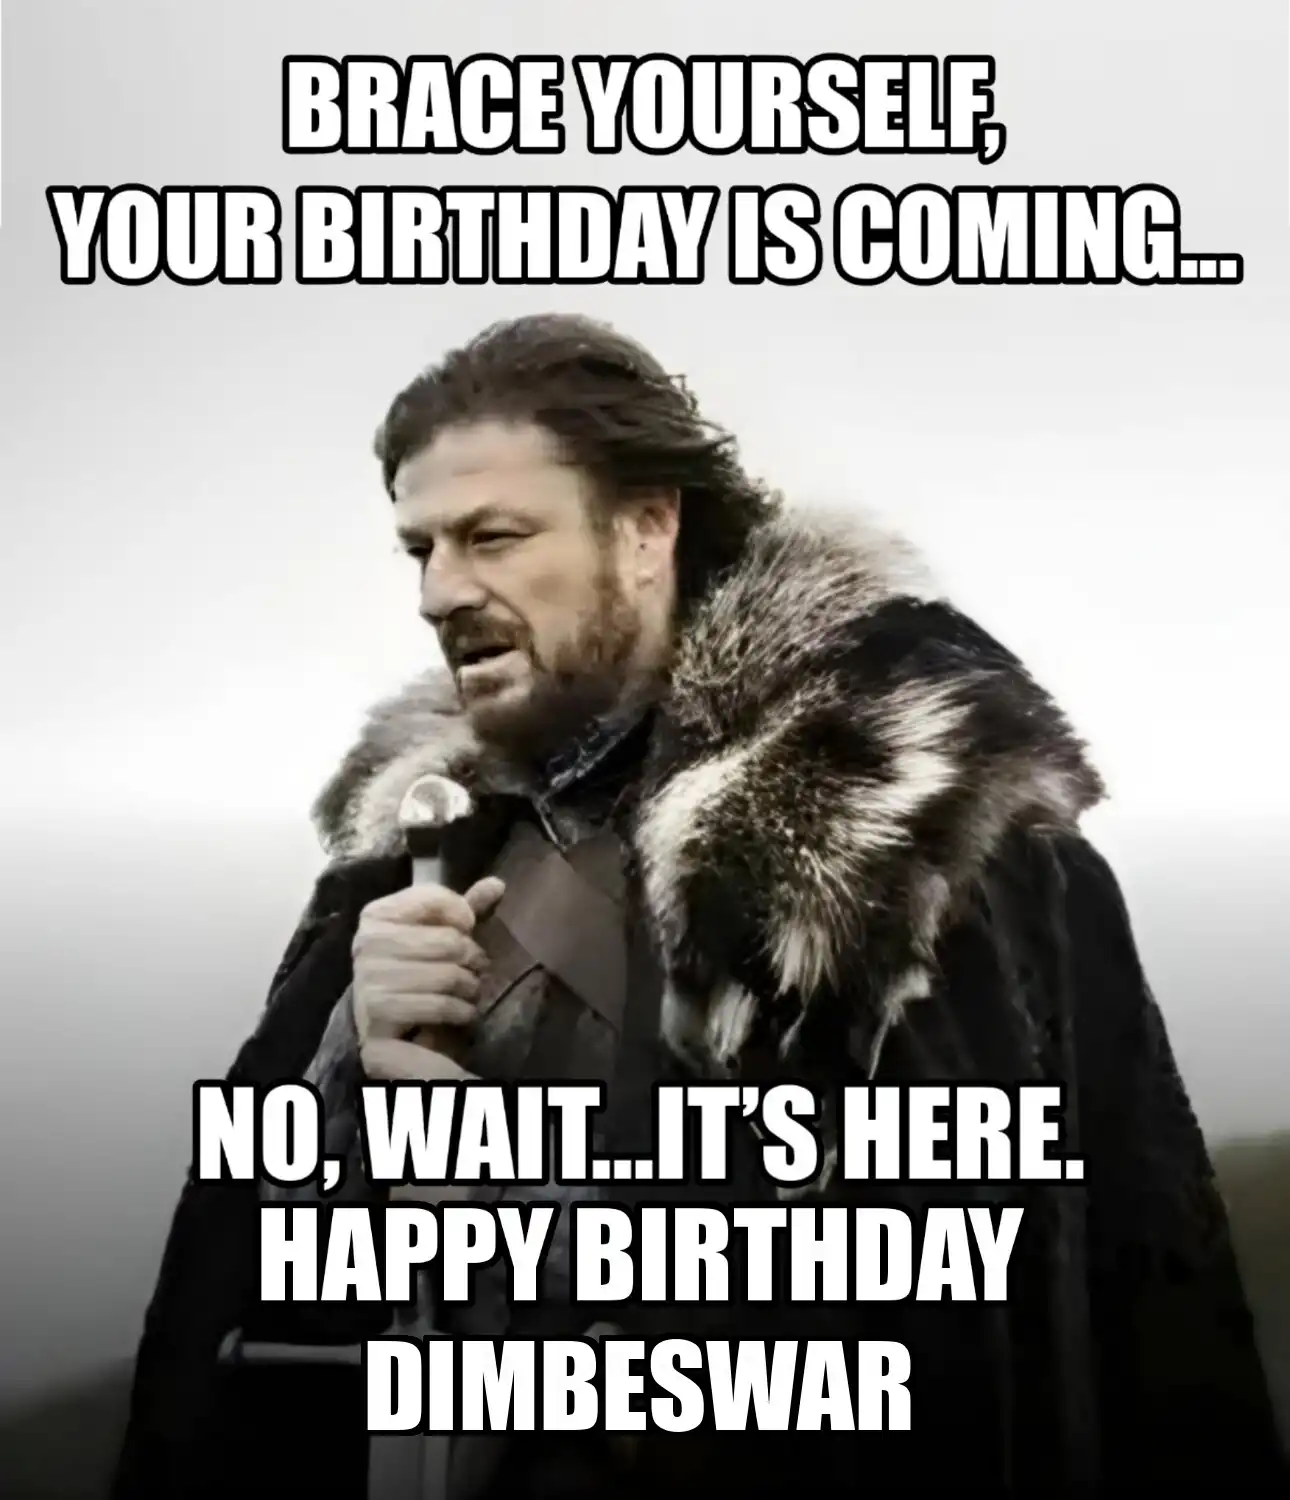 Happy Birthday Dimbeswar Brace Yourself Your Birthday Is Coming Meme